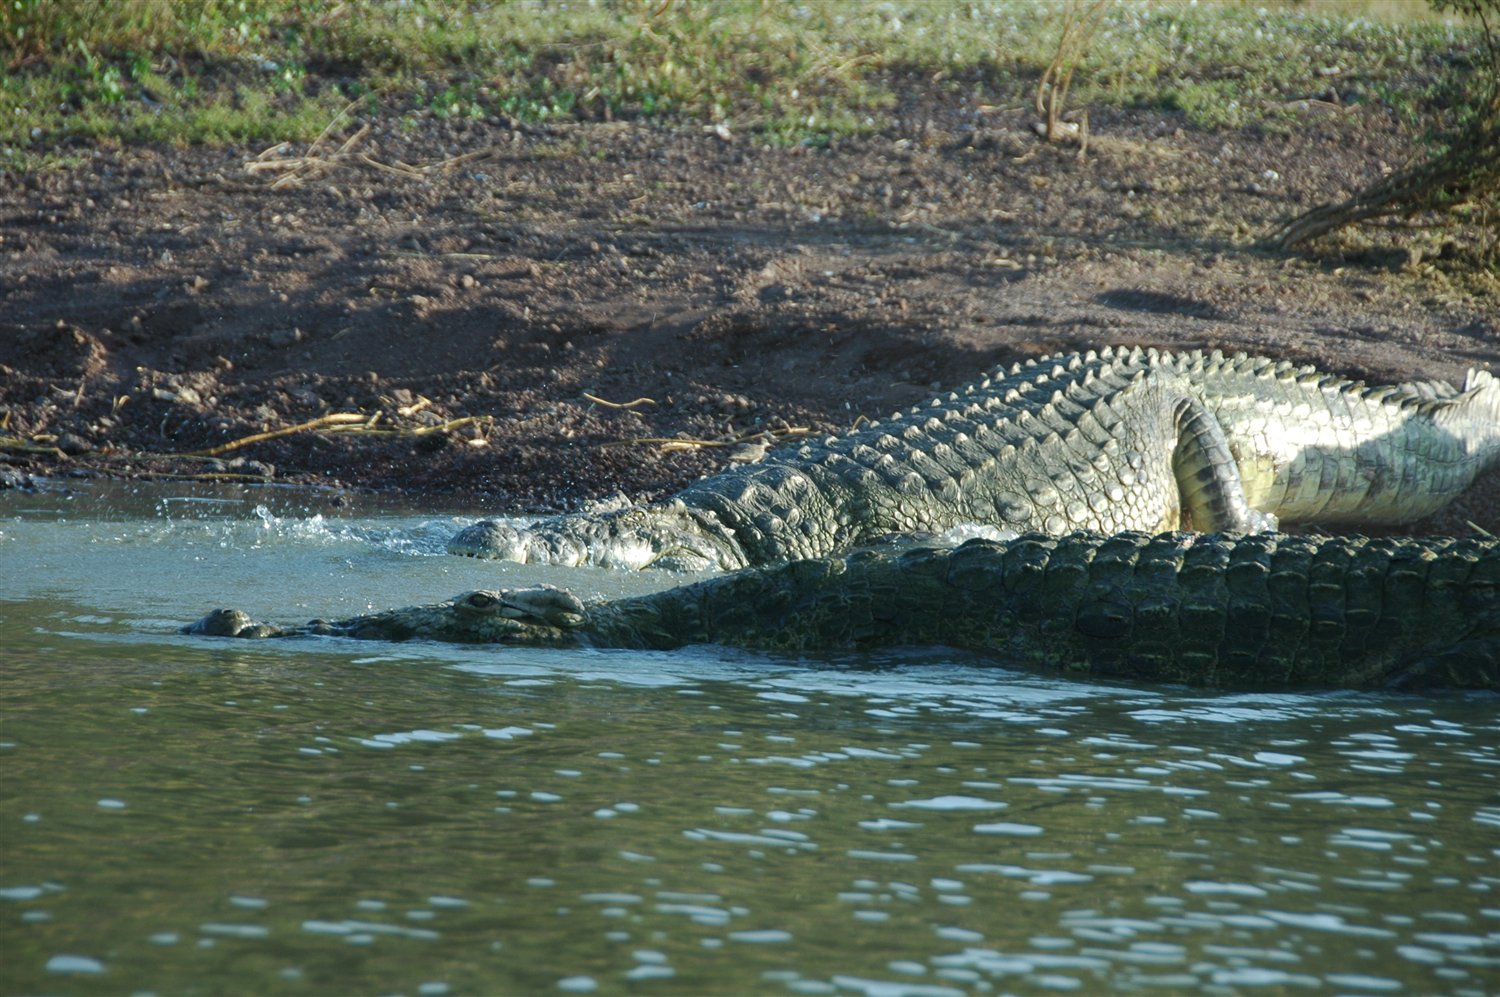 Etiopia - krokodyl